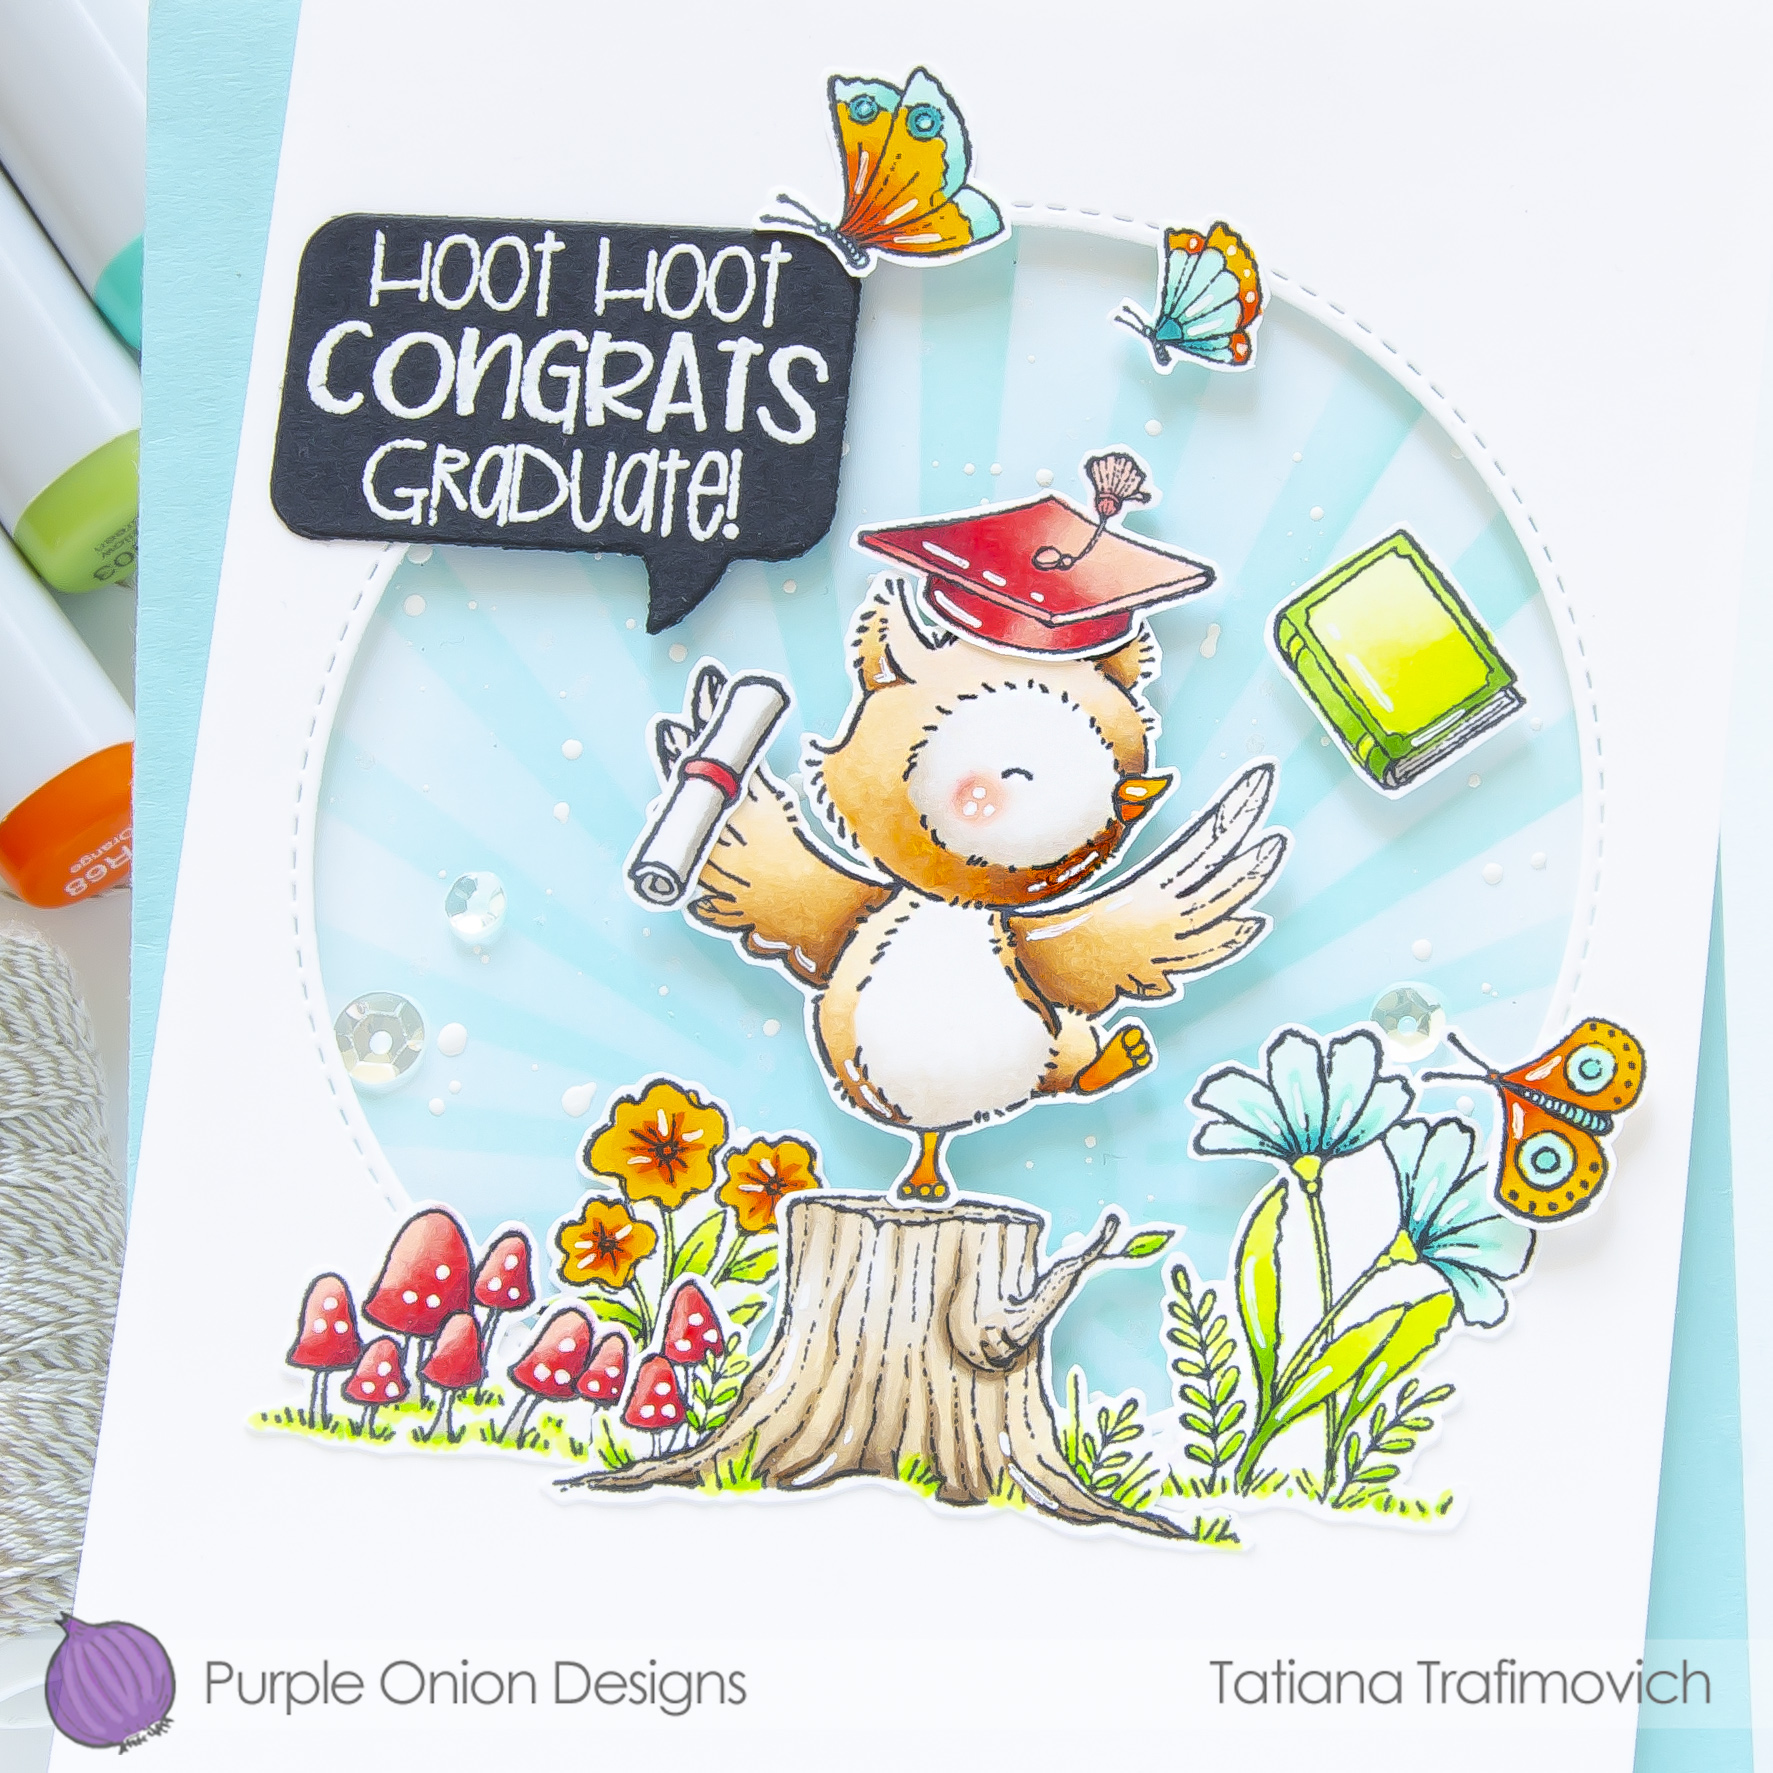 Congrats Graduate! #handmade card by Tatiana Trafimovich #tatianacraftandart - stamps by Purple Onion Designs